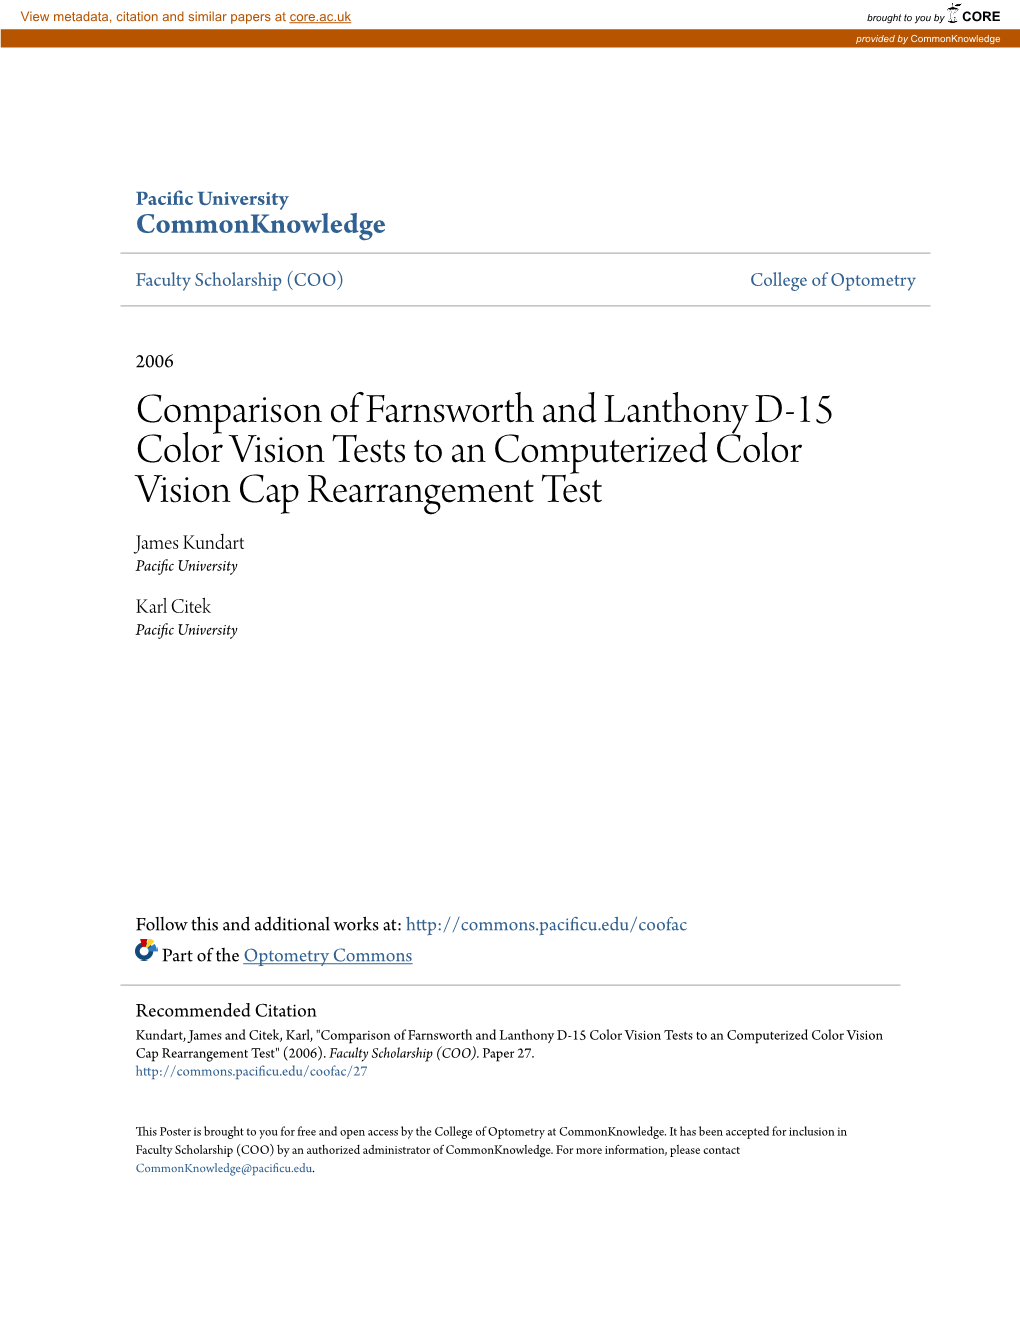 Comparison of Farnsworth and Lanthony D-15 Color Vision Tests to an Computerized Color Vision Cap Rearrangement Test James Kundart Pacific Nu Iversity